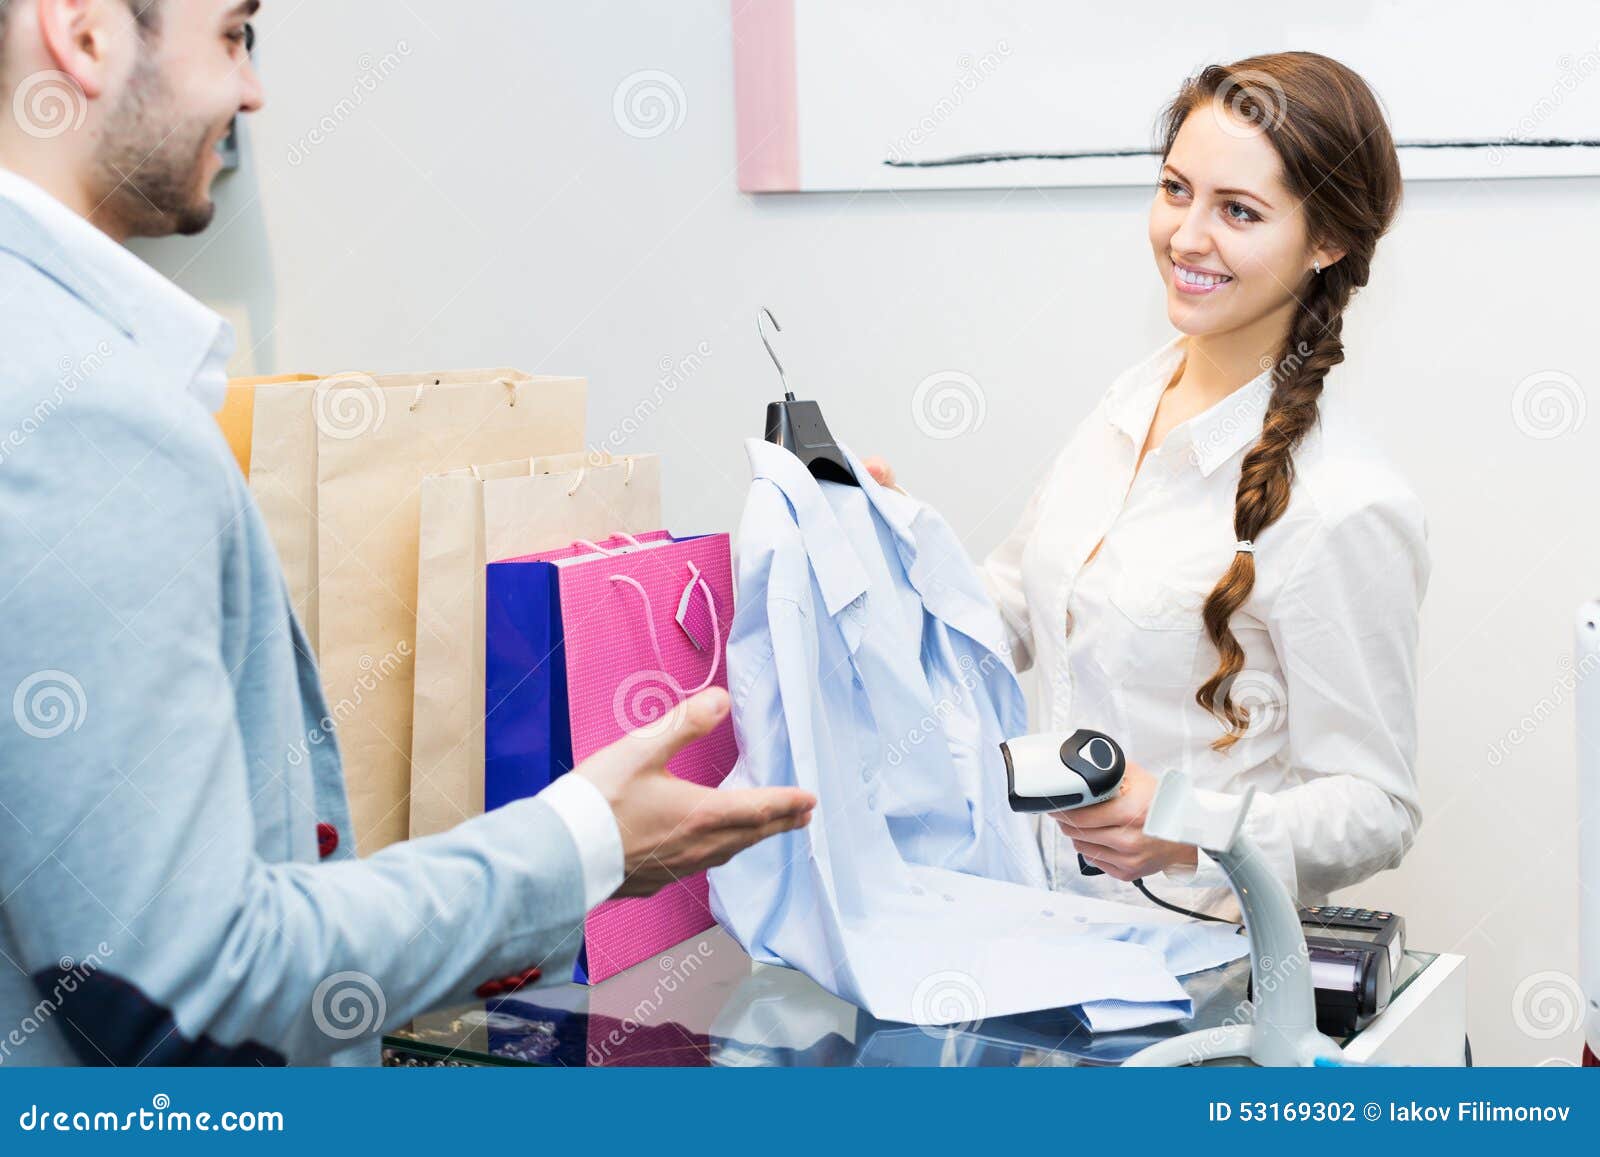 store clerk serving purchaser